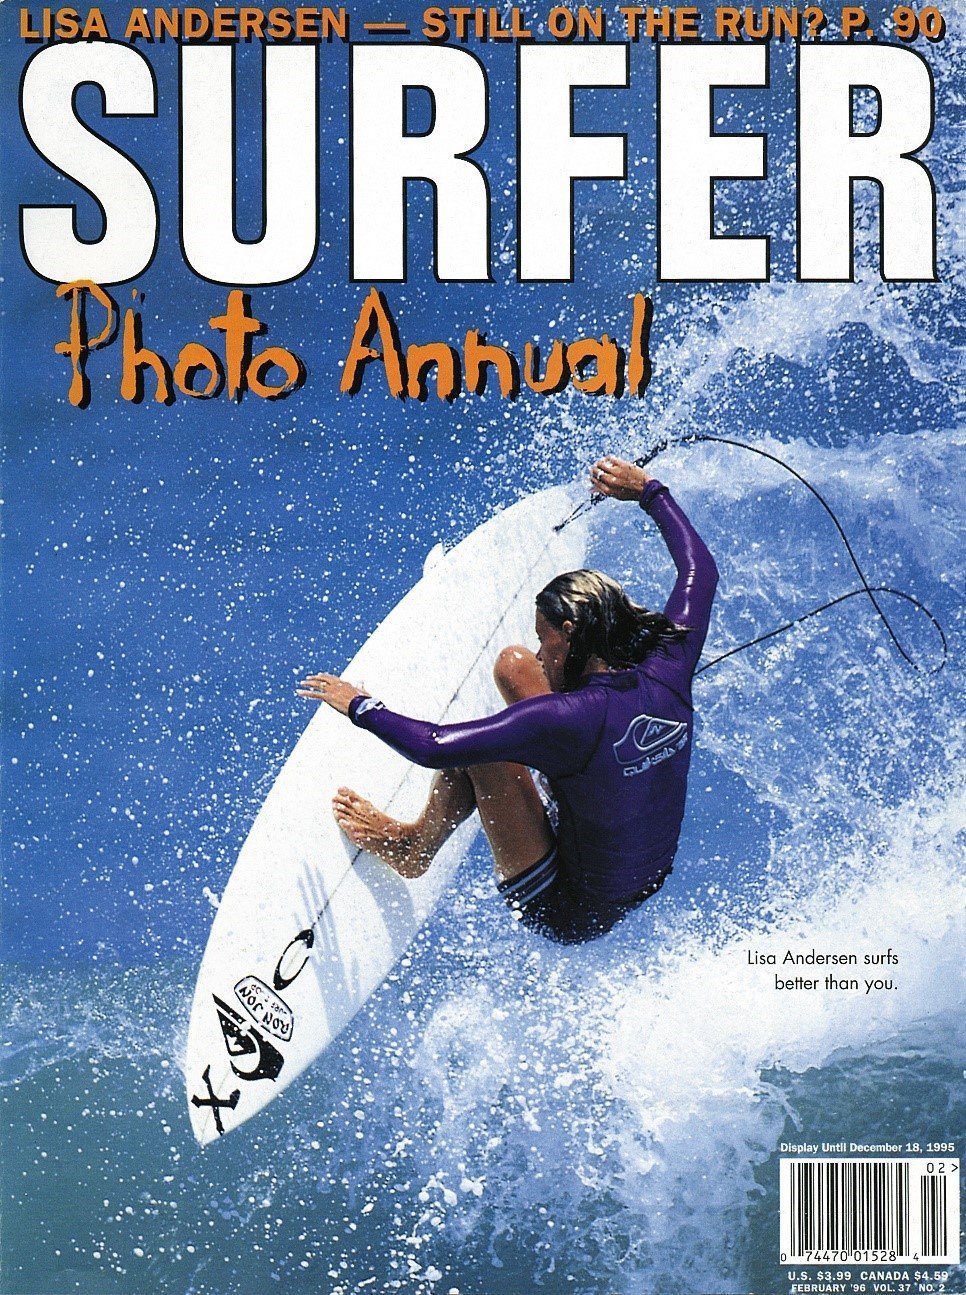 lisa-anderson-surfer-mag-cover2.jpg